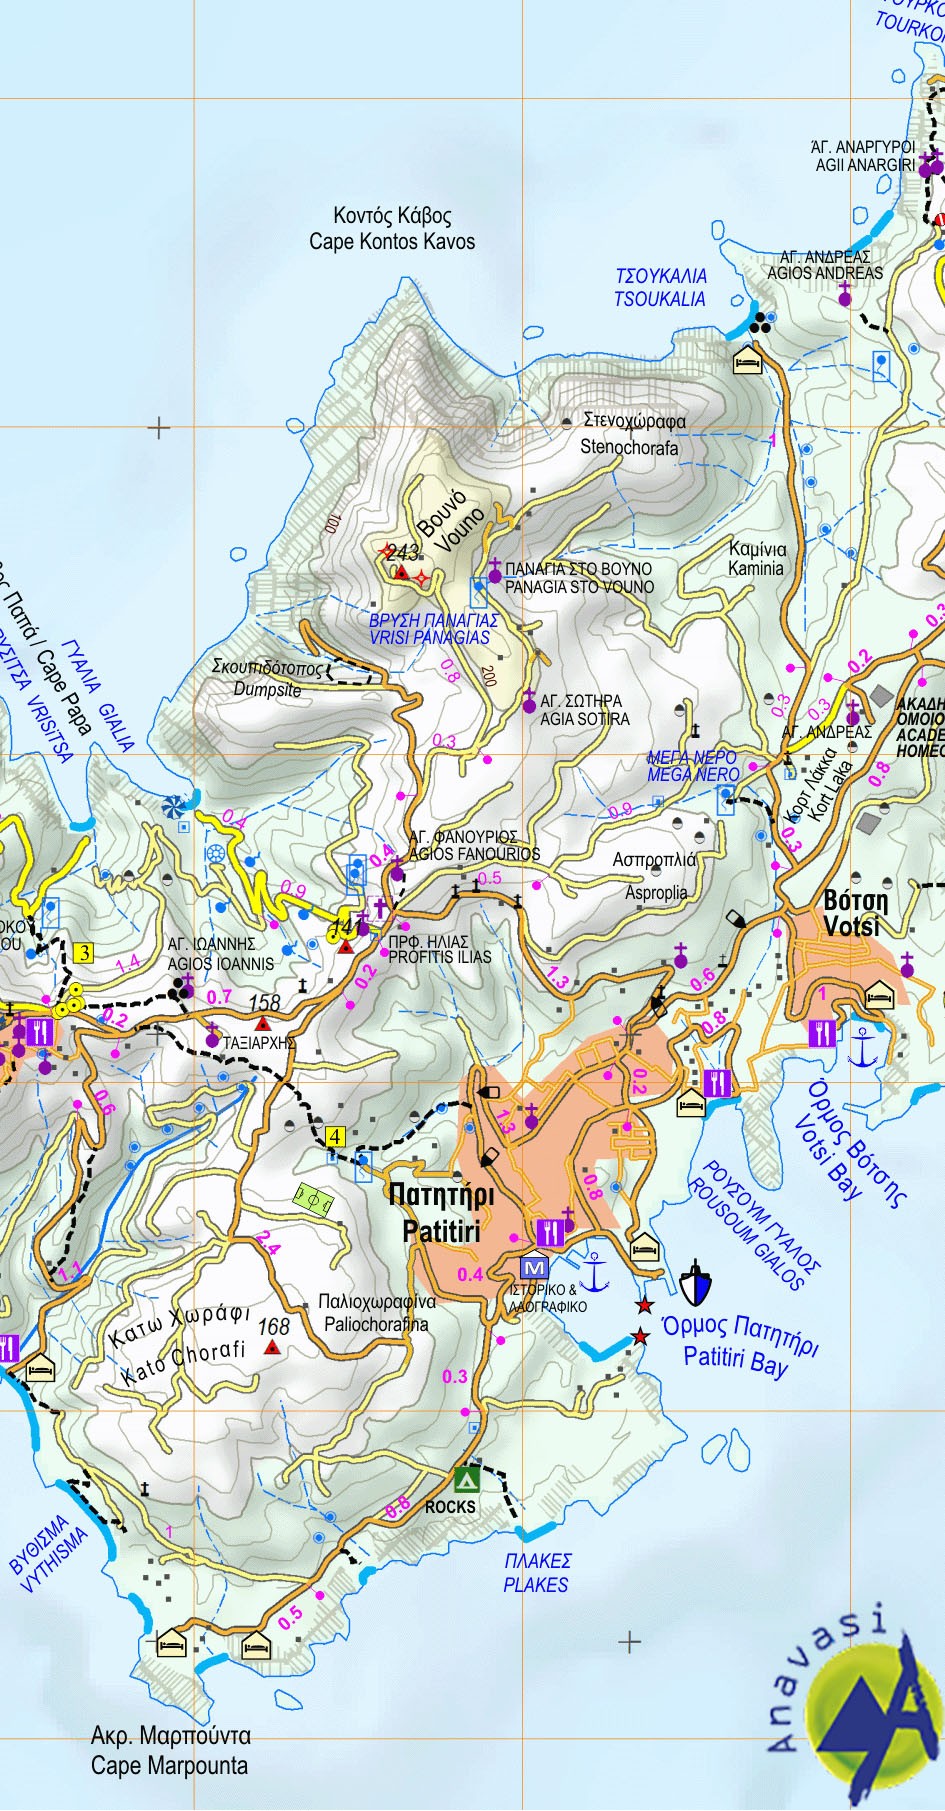 Alonnisos • Hiking map 1:25 000